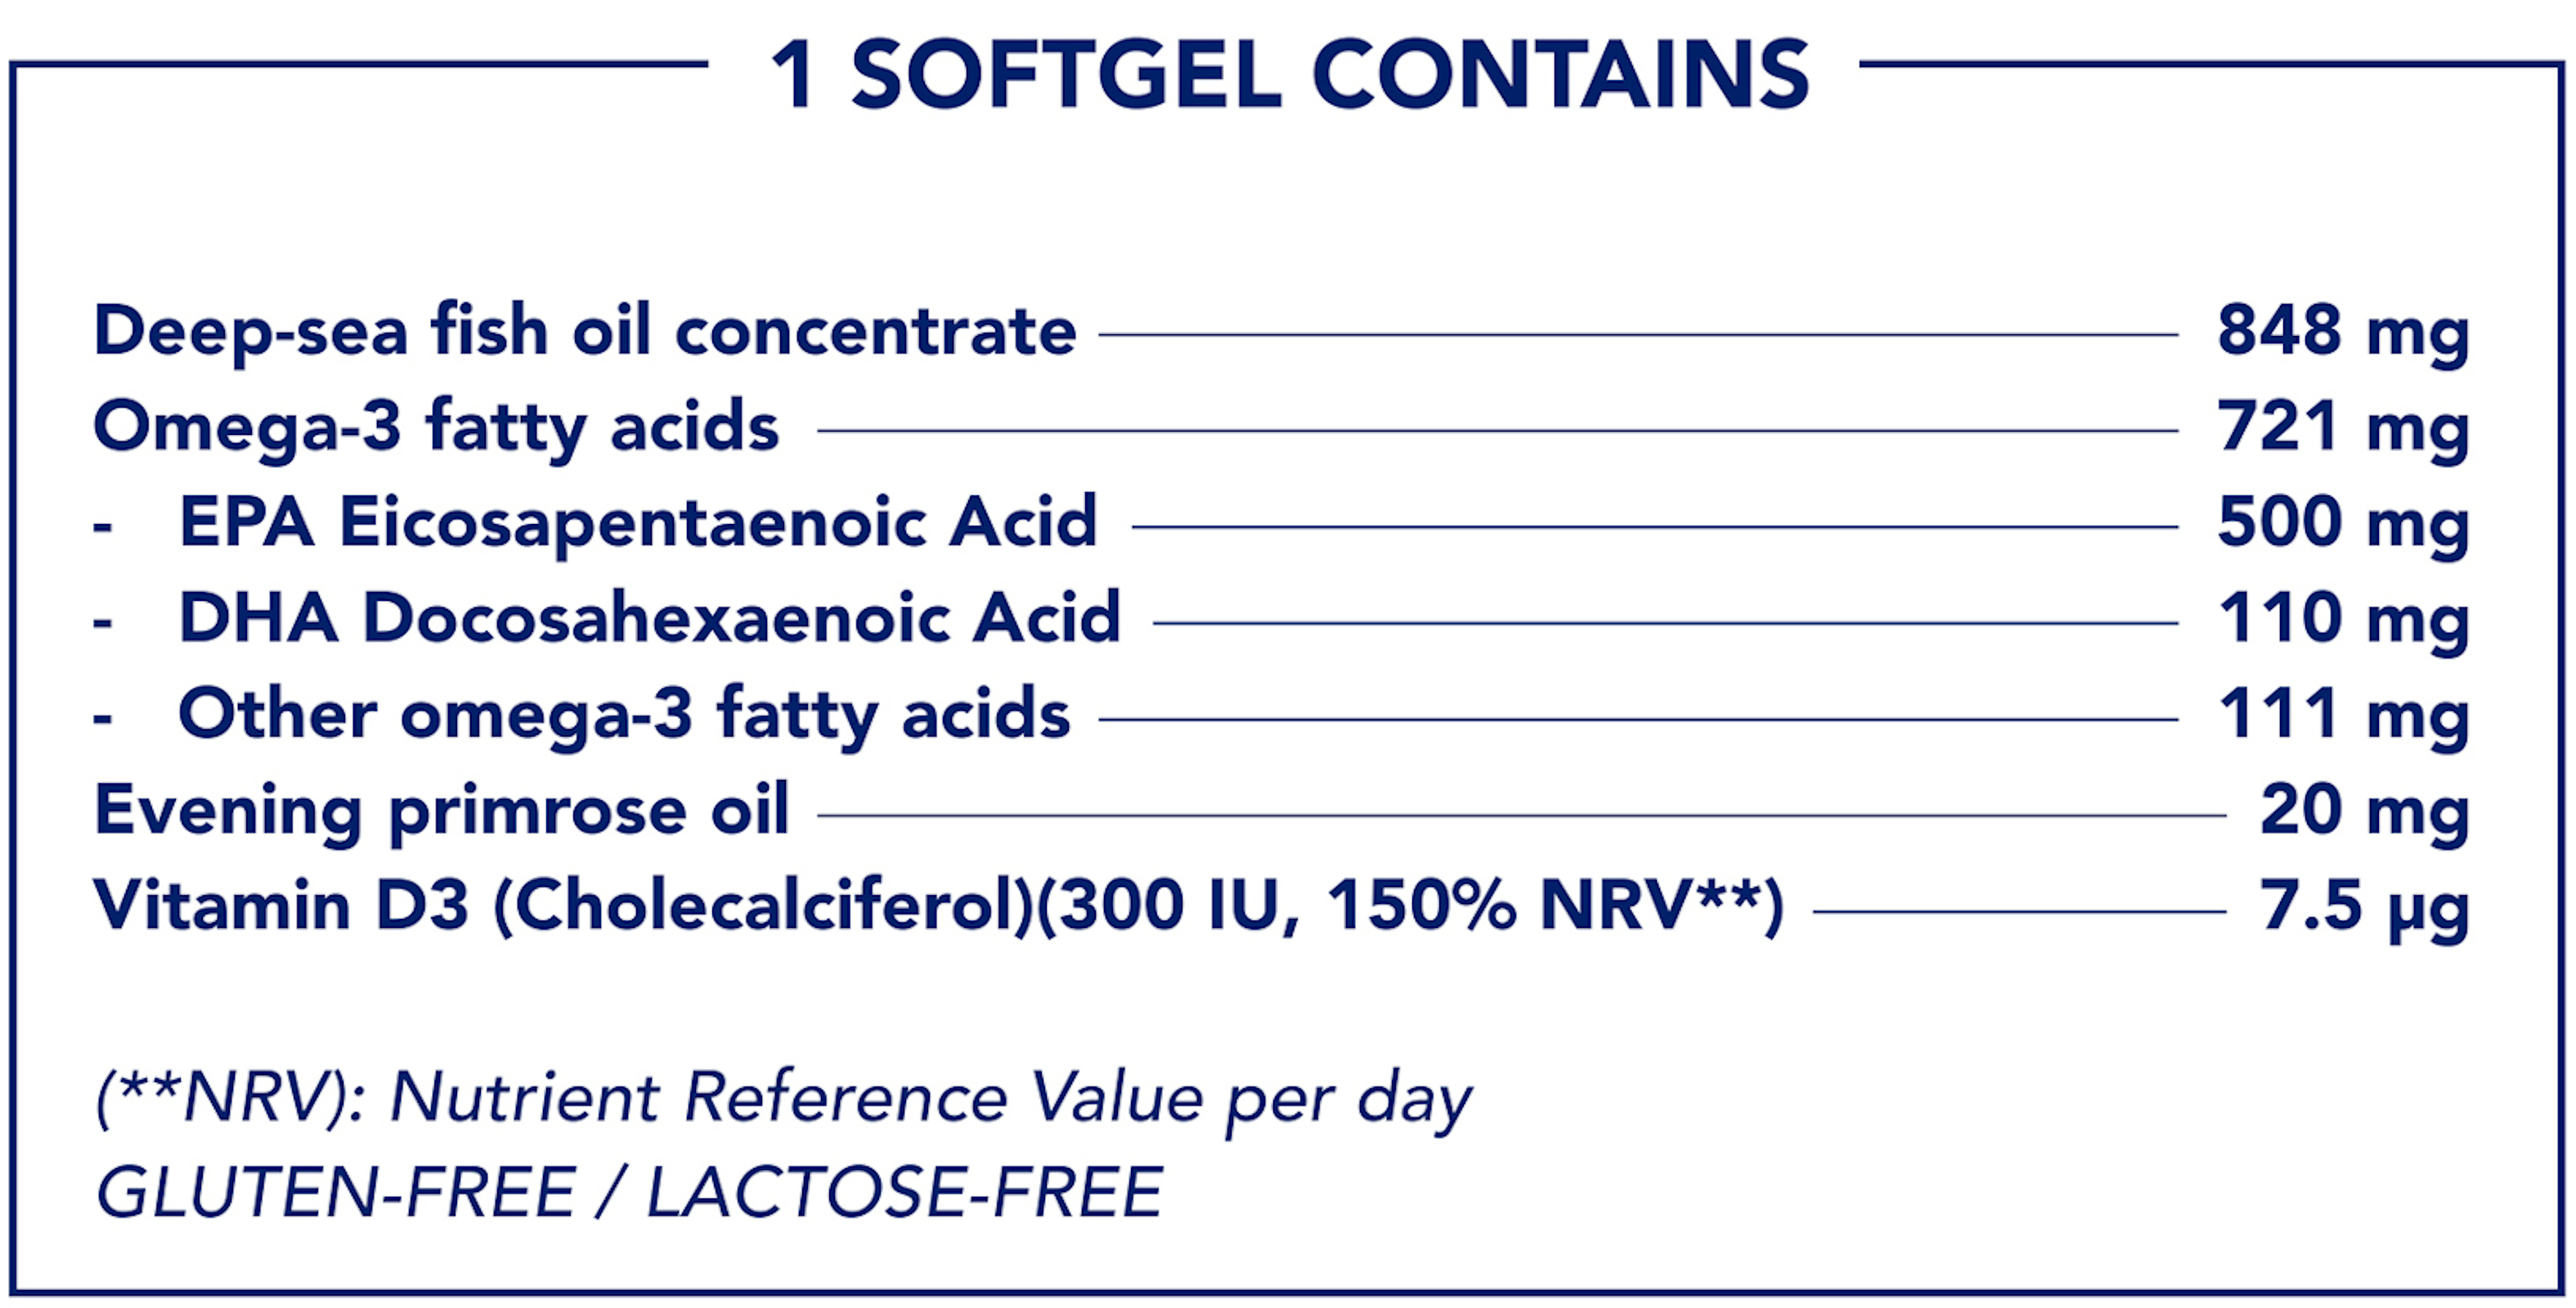 1 SOFTGEL CONTAINS
                          Deep-sea fish oil concentrate, 848 mg
                          Omega-3 fatty acids, 721 mg
                          EPA Eicosapentaenoic Acid, 500 mg
                          DHA Docosahexaenoic Acid, 110 mg
                          Other omega-3 fatty acids, 111 mg
                          Evening primrose oil, 20 mg
                          Vitamin D3 (Cholecalciferol) (300 IU, 150% NRV**), 7.5 µg
                          (**NRV): Nutrient Reference Value per day
                          GLUTEN-FREE / LACTOSE-FREE